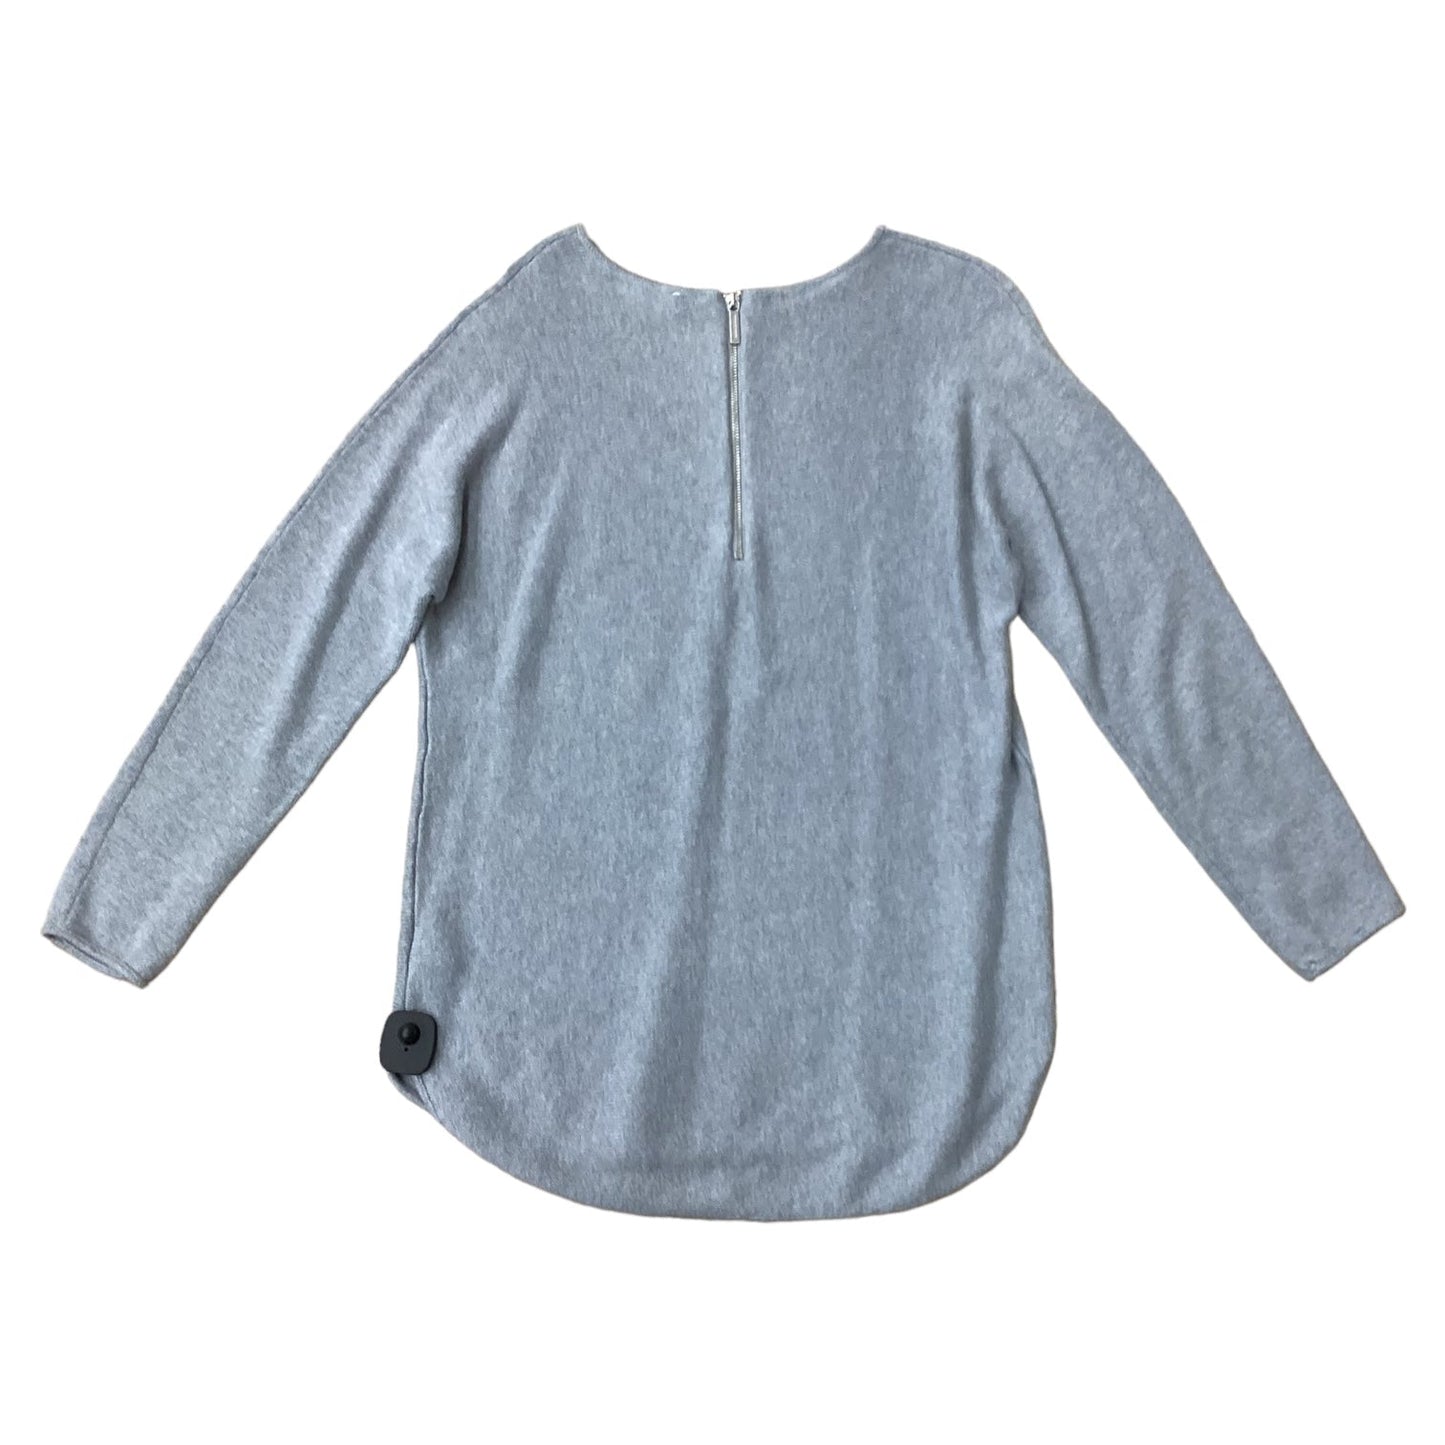 Grey Sweater Designer Michael By Michael Kors, Size L